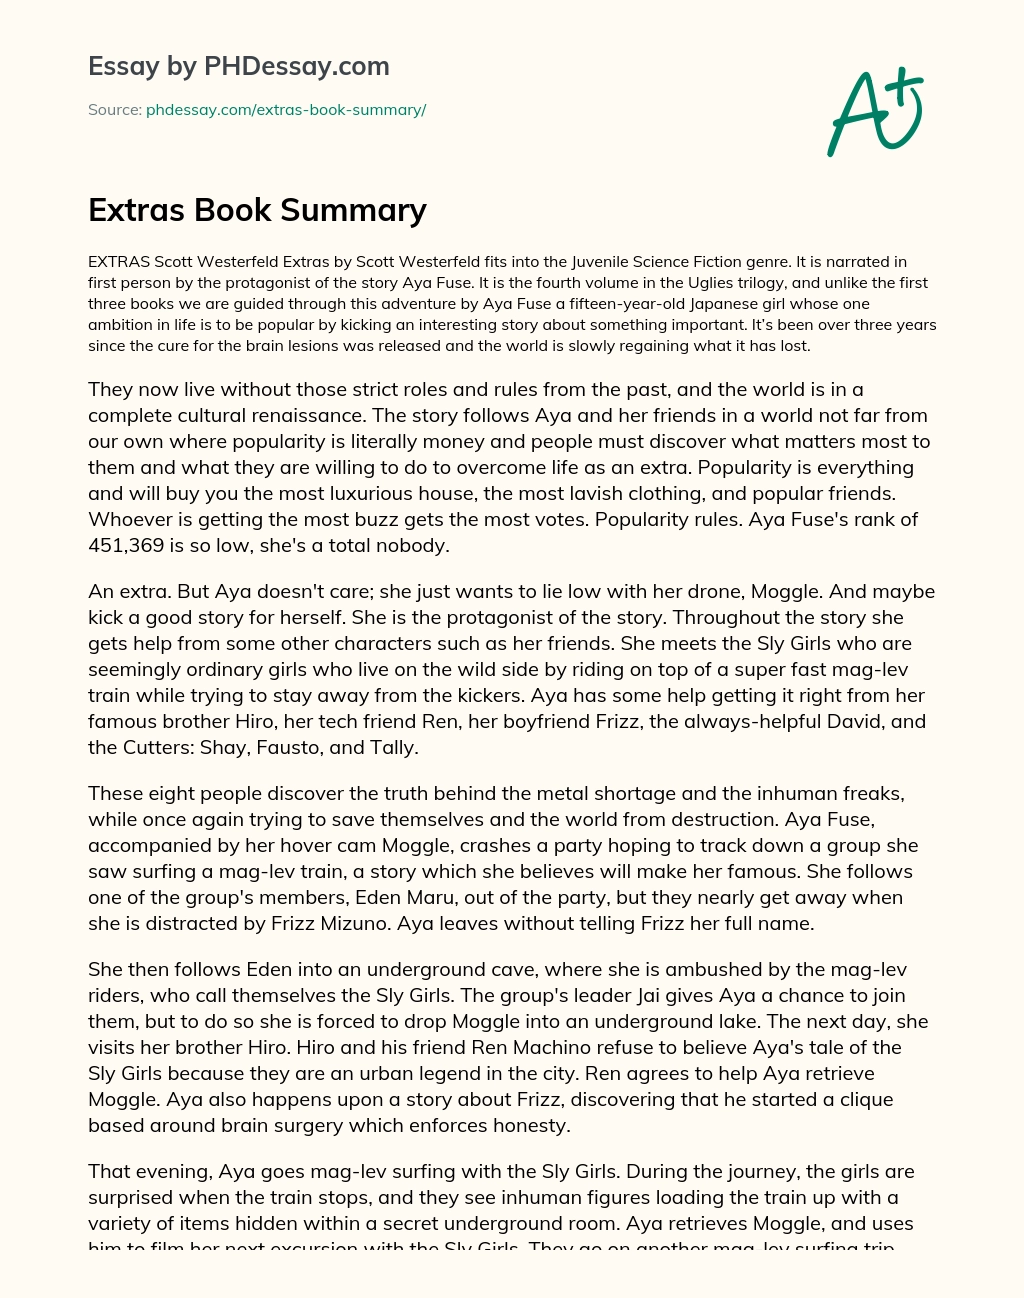 Extras Book Summary essay